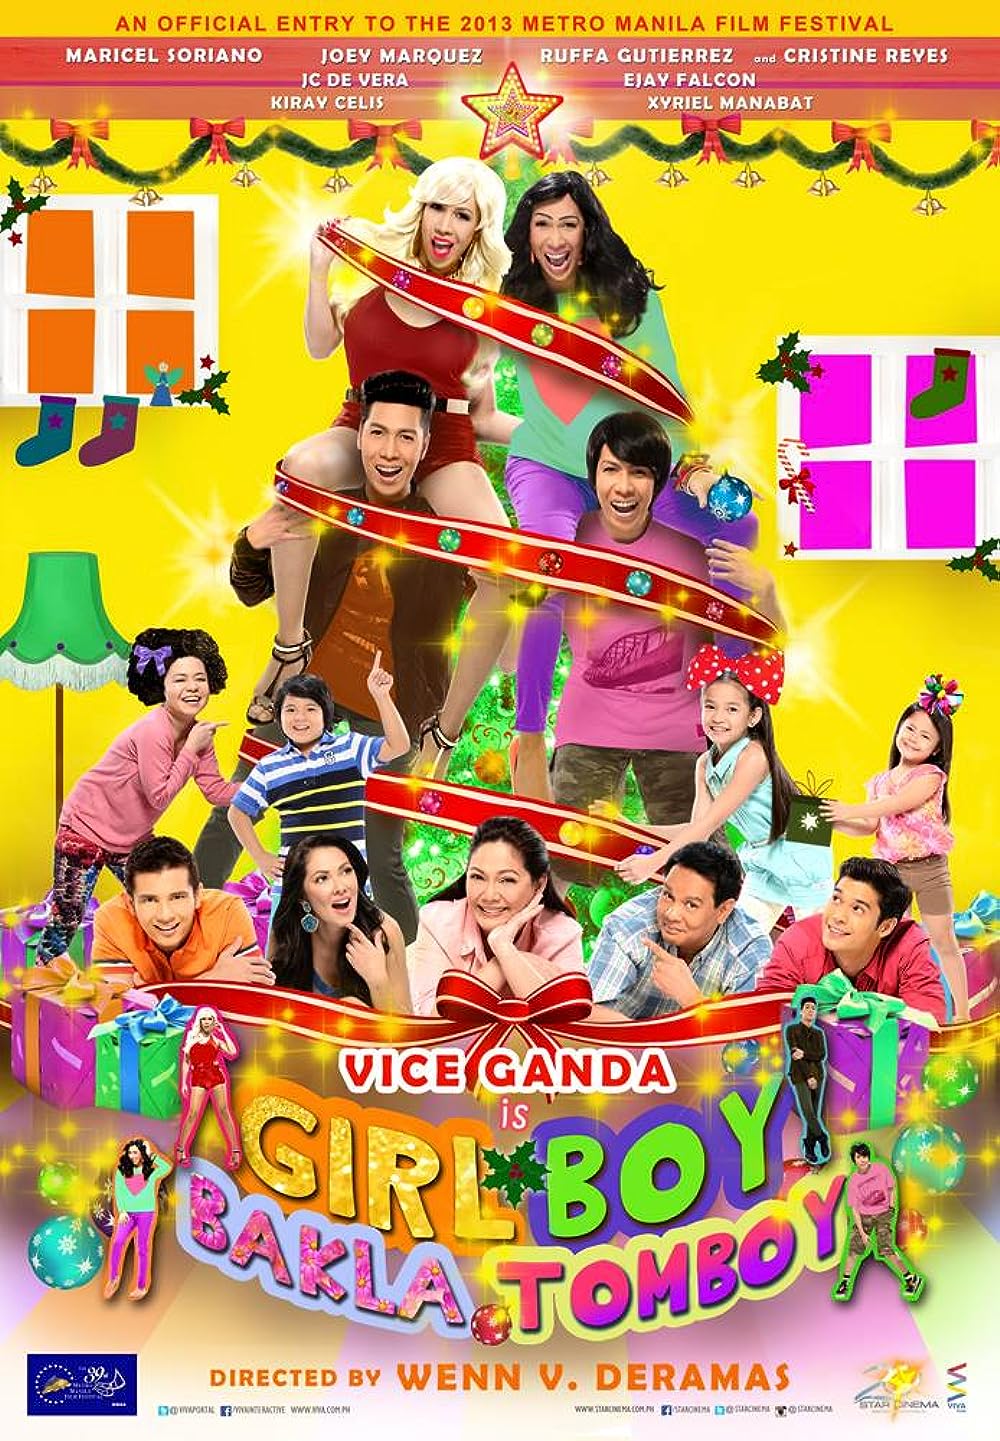 Girl, Boy, Bakla, Tomboy Movie Poster